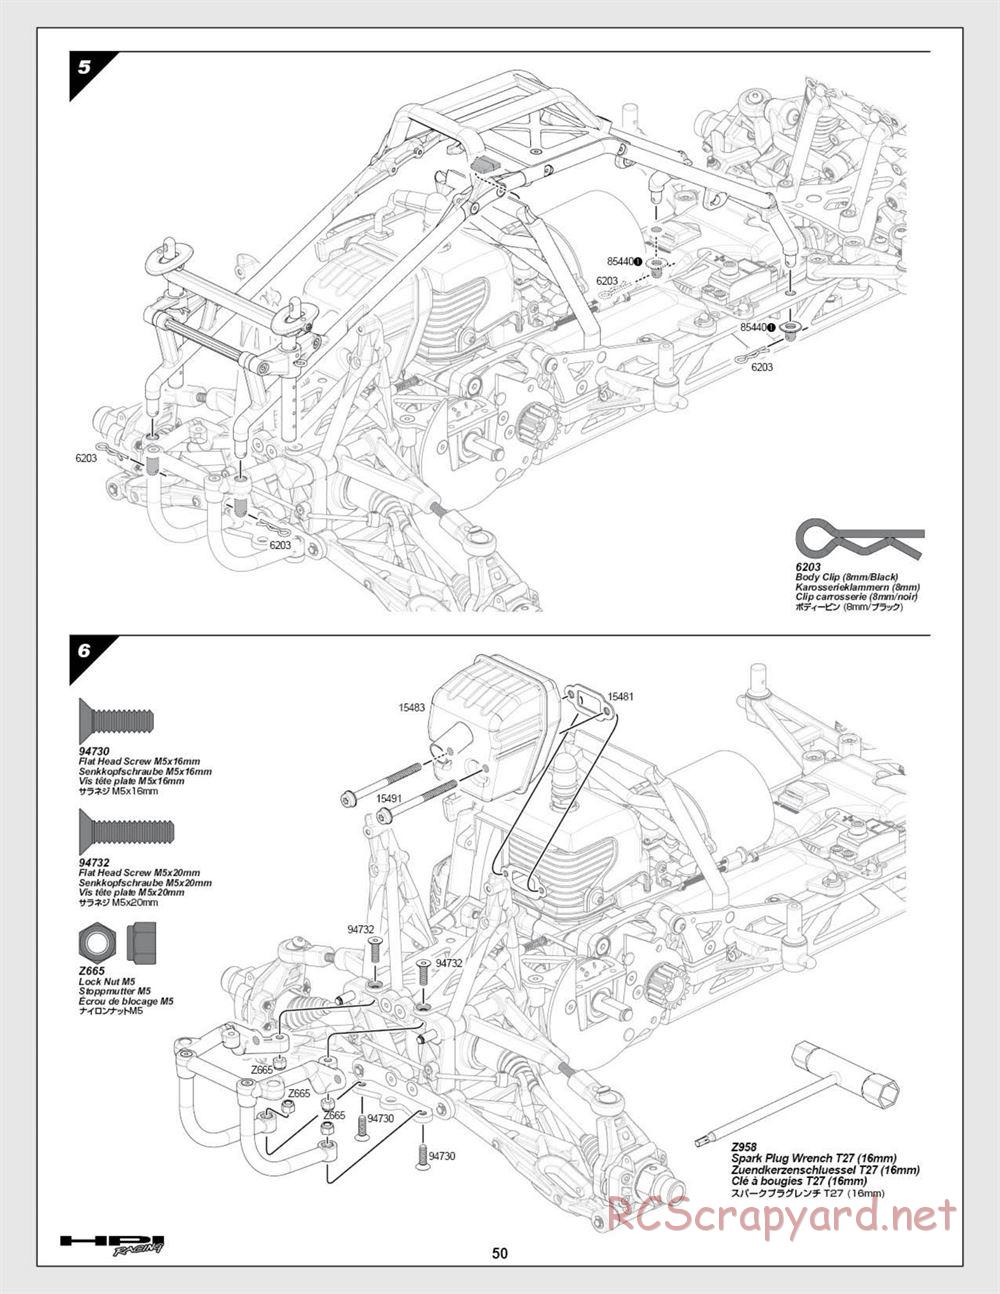 HPI - Baja 5T (2008) - Manual - Page 50